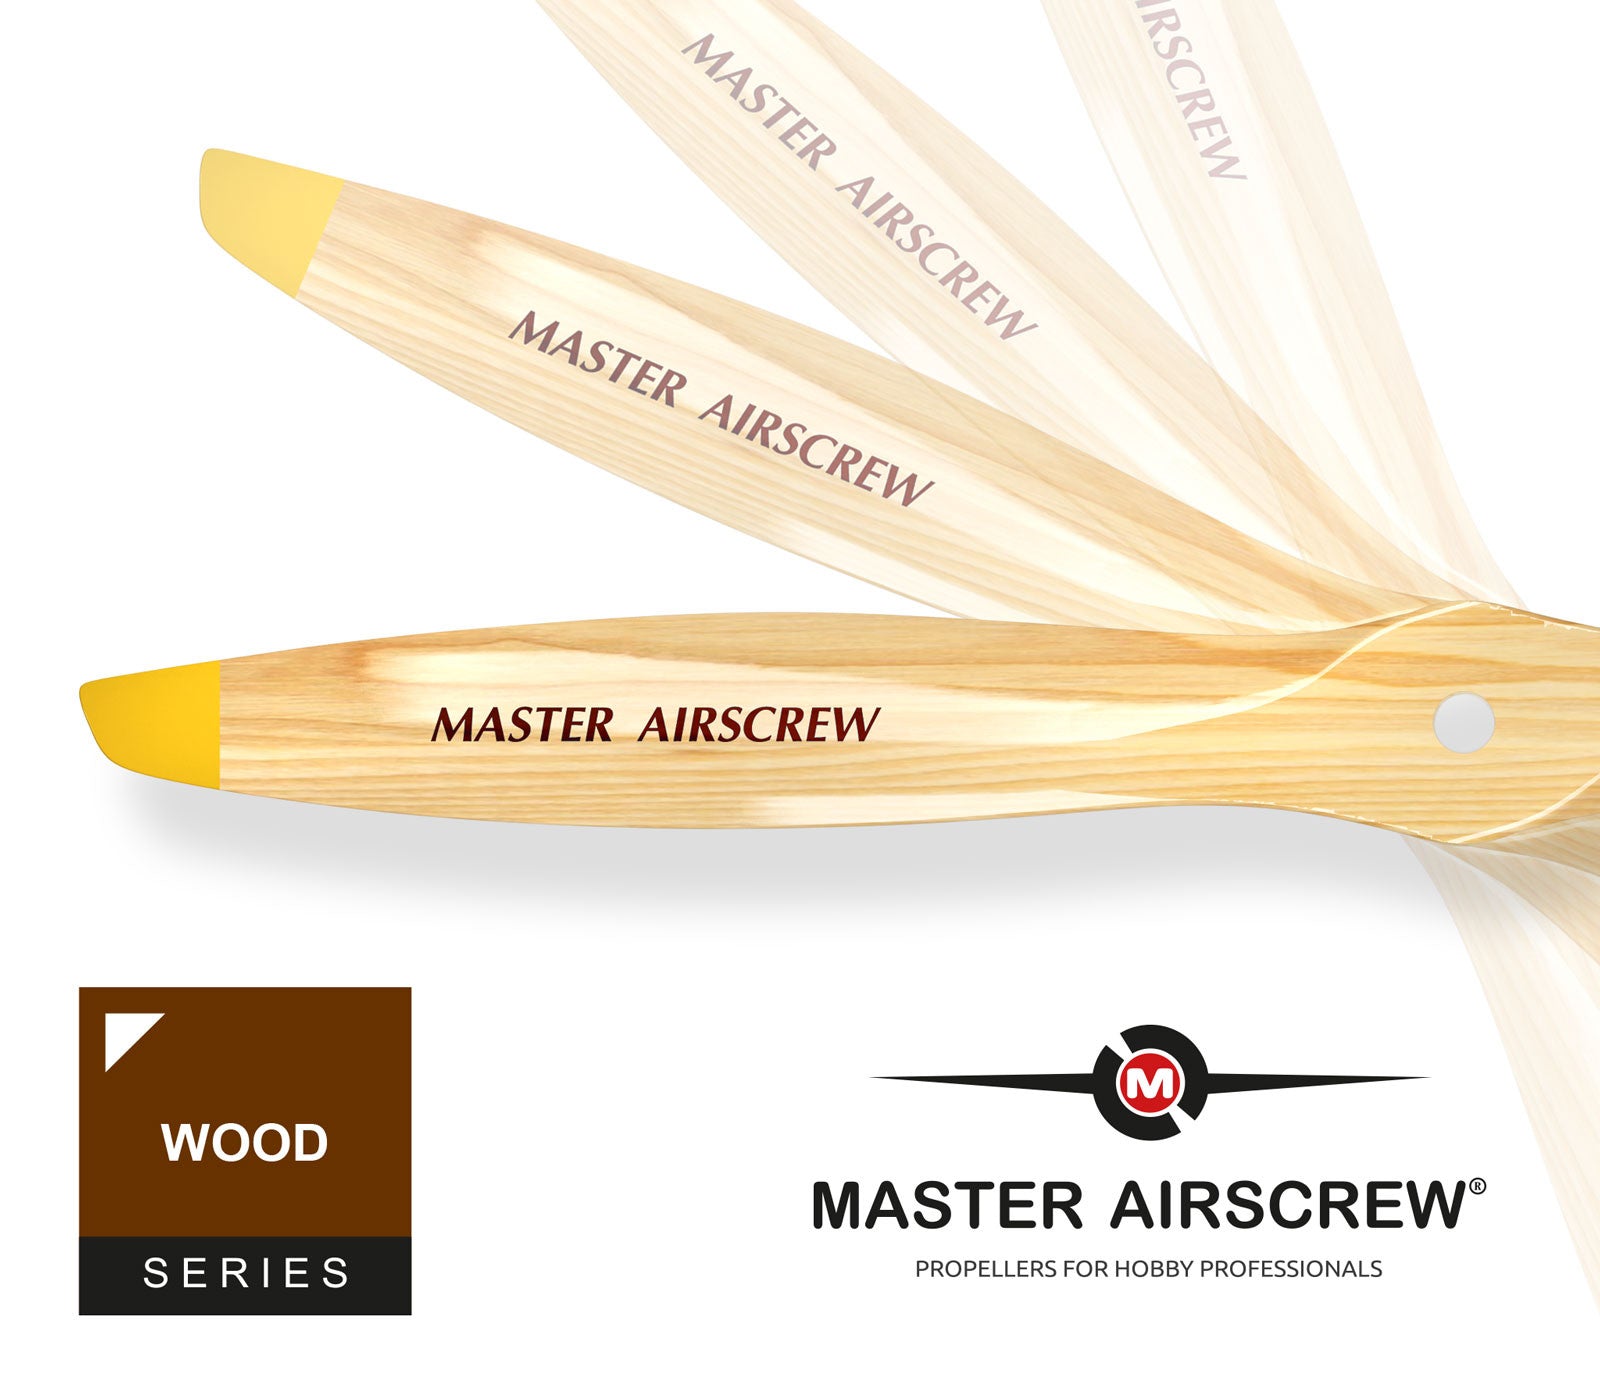 Wood-Maple - 22x10 Propeller - Master Airscrew